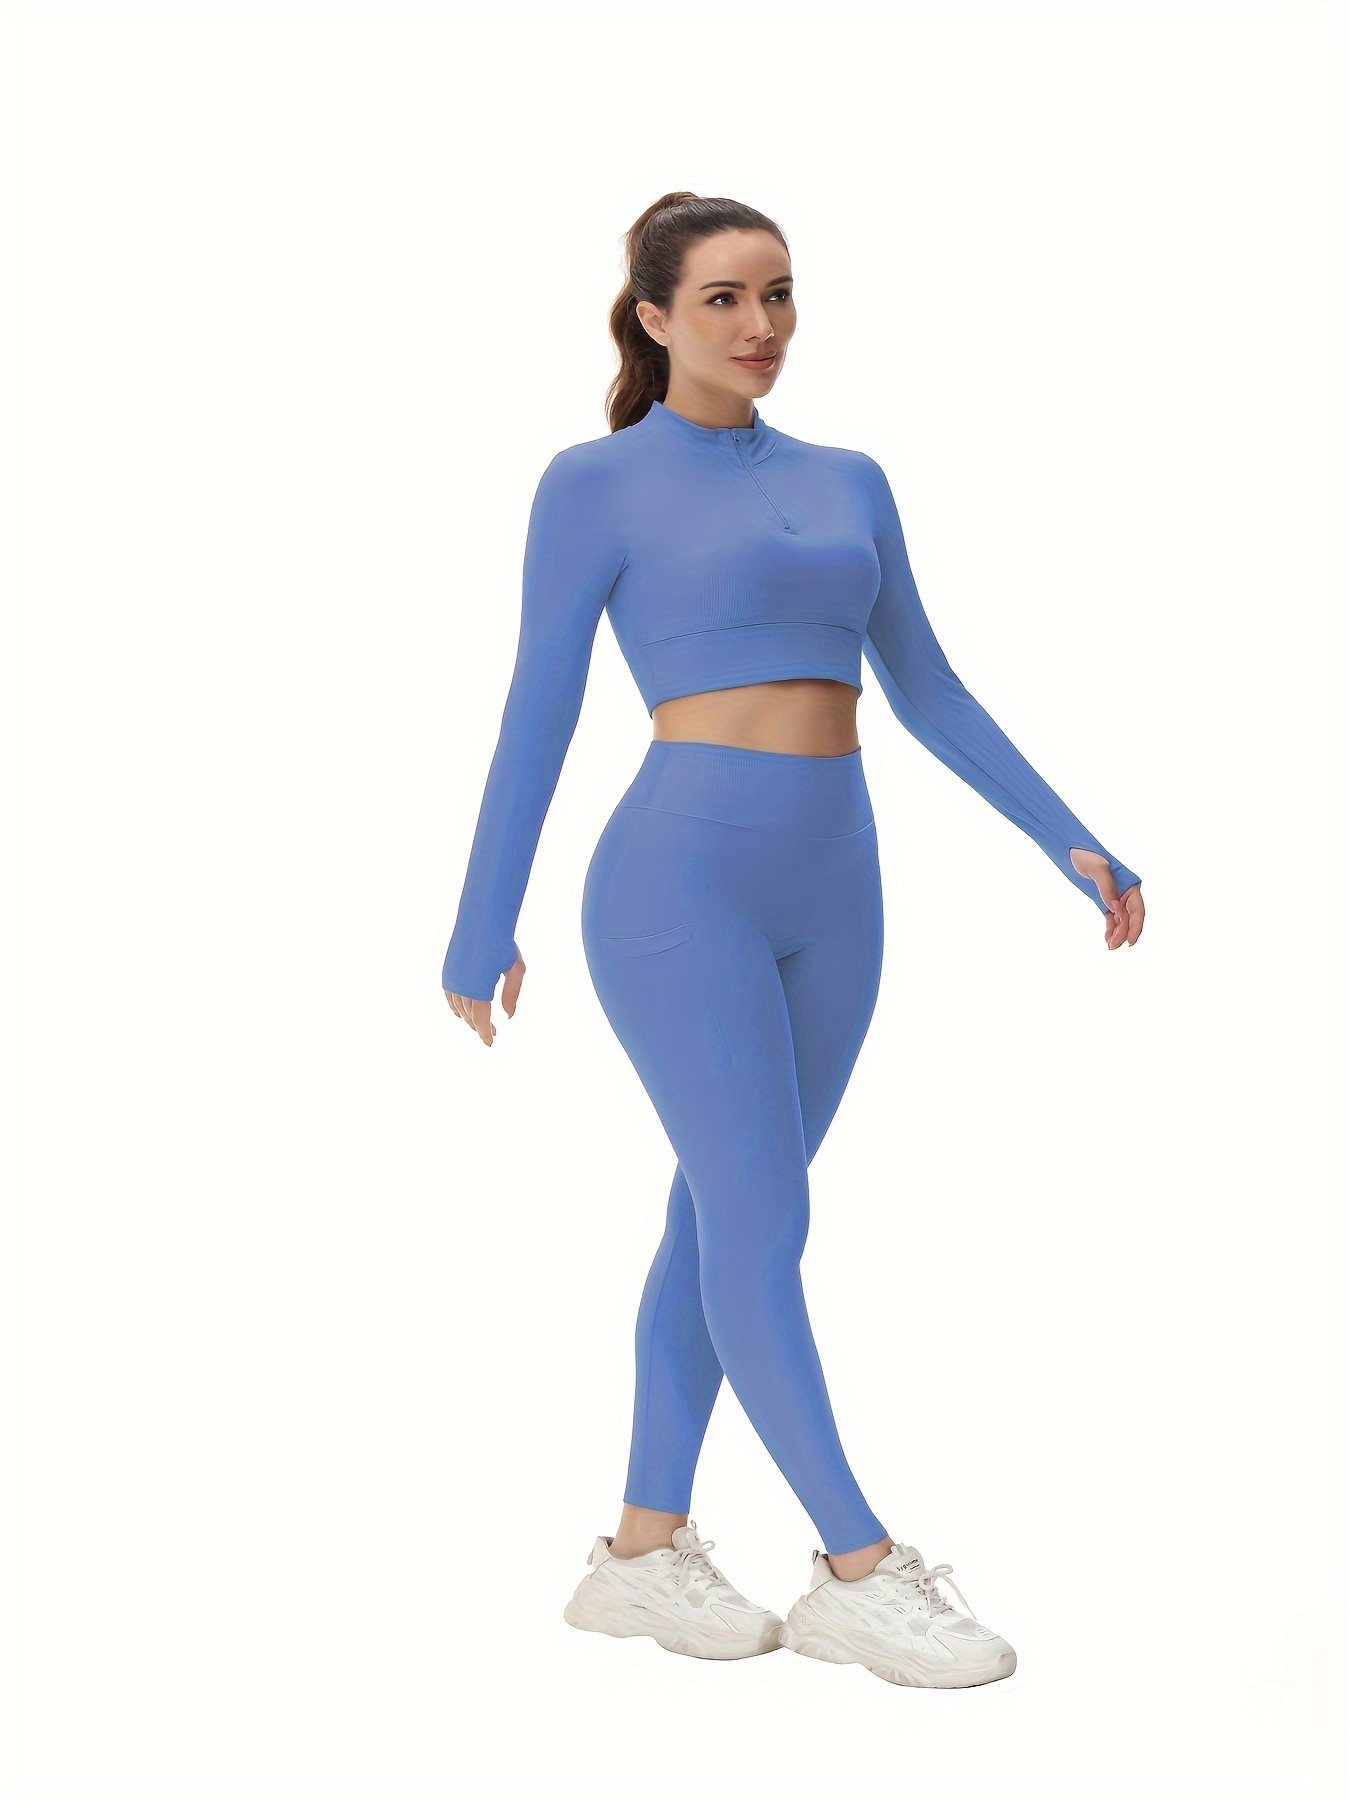 JDEFEG Yoga Clothes Set for Teen Girls Women 2Piece Activewear Workout Yoga  Set Long Sleeve Crop Top and High Waist Leggings Rubber Brick Polyester  Blue L 